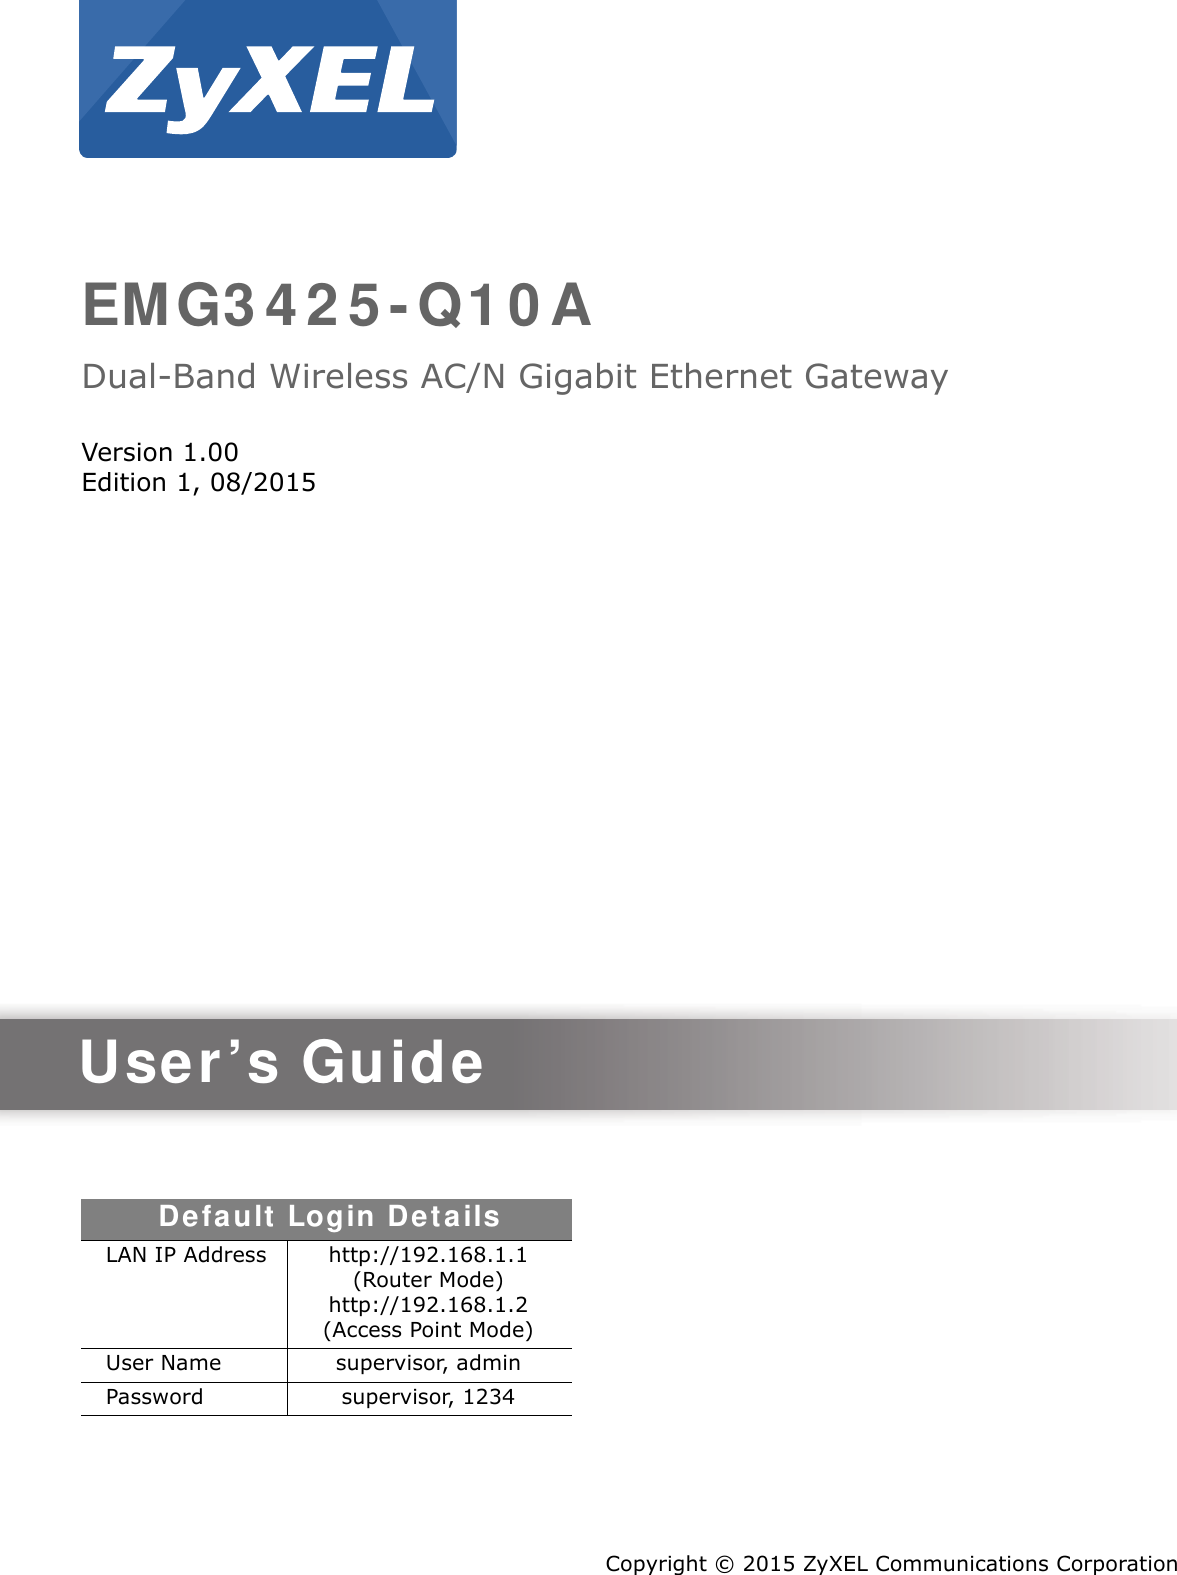 Quick Start Guidewww.zyxel.comEMG3 4 2 5 - Q1 0 ADual-Band Wireless AC/N Gigabit Ethernet GatewayVersion 1.00Edition 1, 08/2015Copyright © 2015 ZyXEL Communications CorporationUser’s GuideDefault  Login Det a ilsLAN IP Address http://192.168.1.1 (Router Mode)http://192.168.1.2 (Access Point Mode)User Name supervisor, adminPassword supervisor, 1234